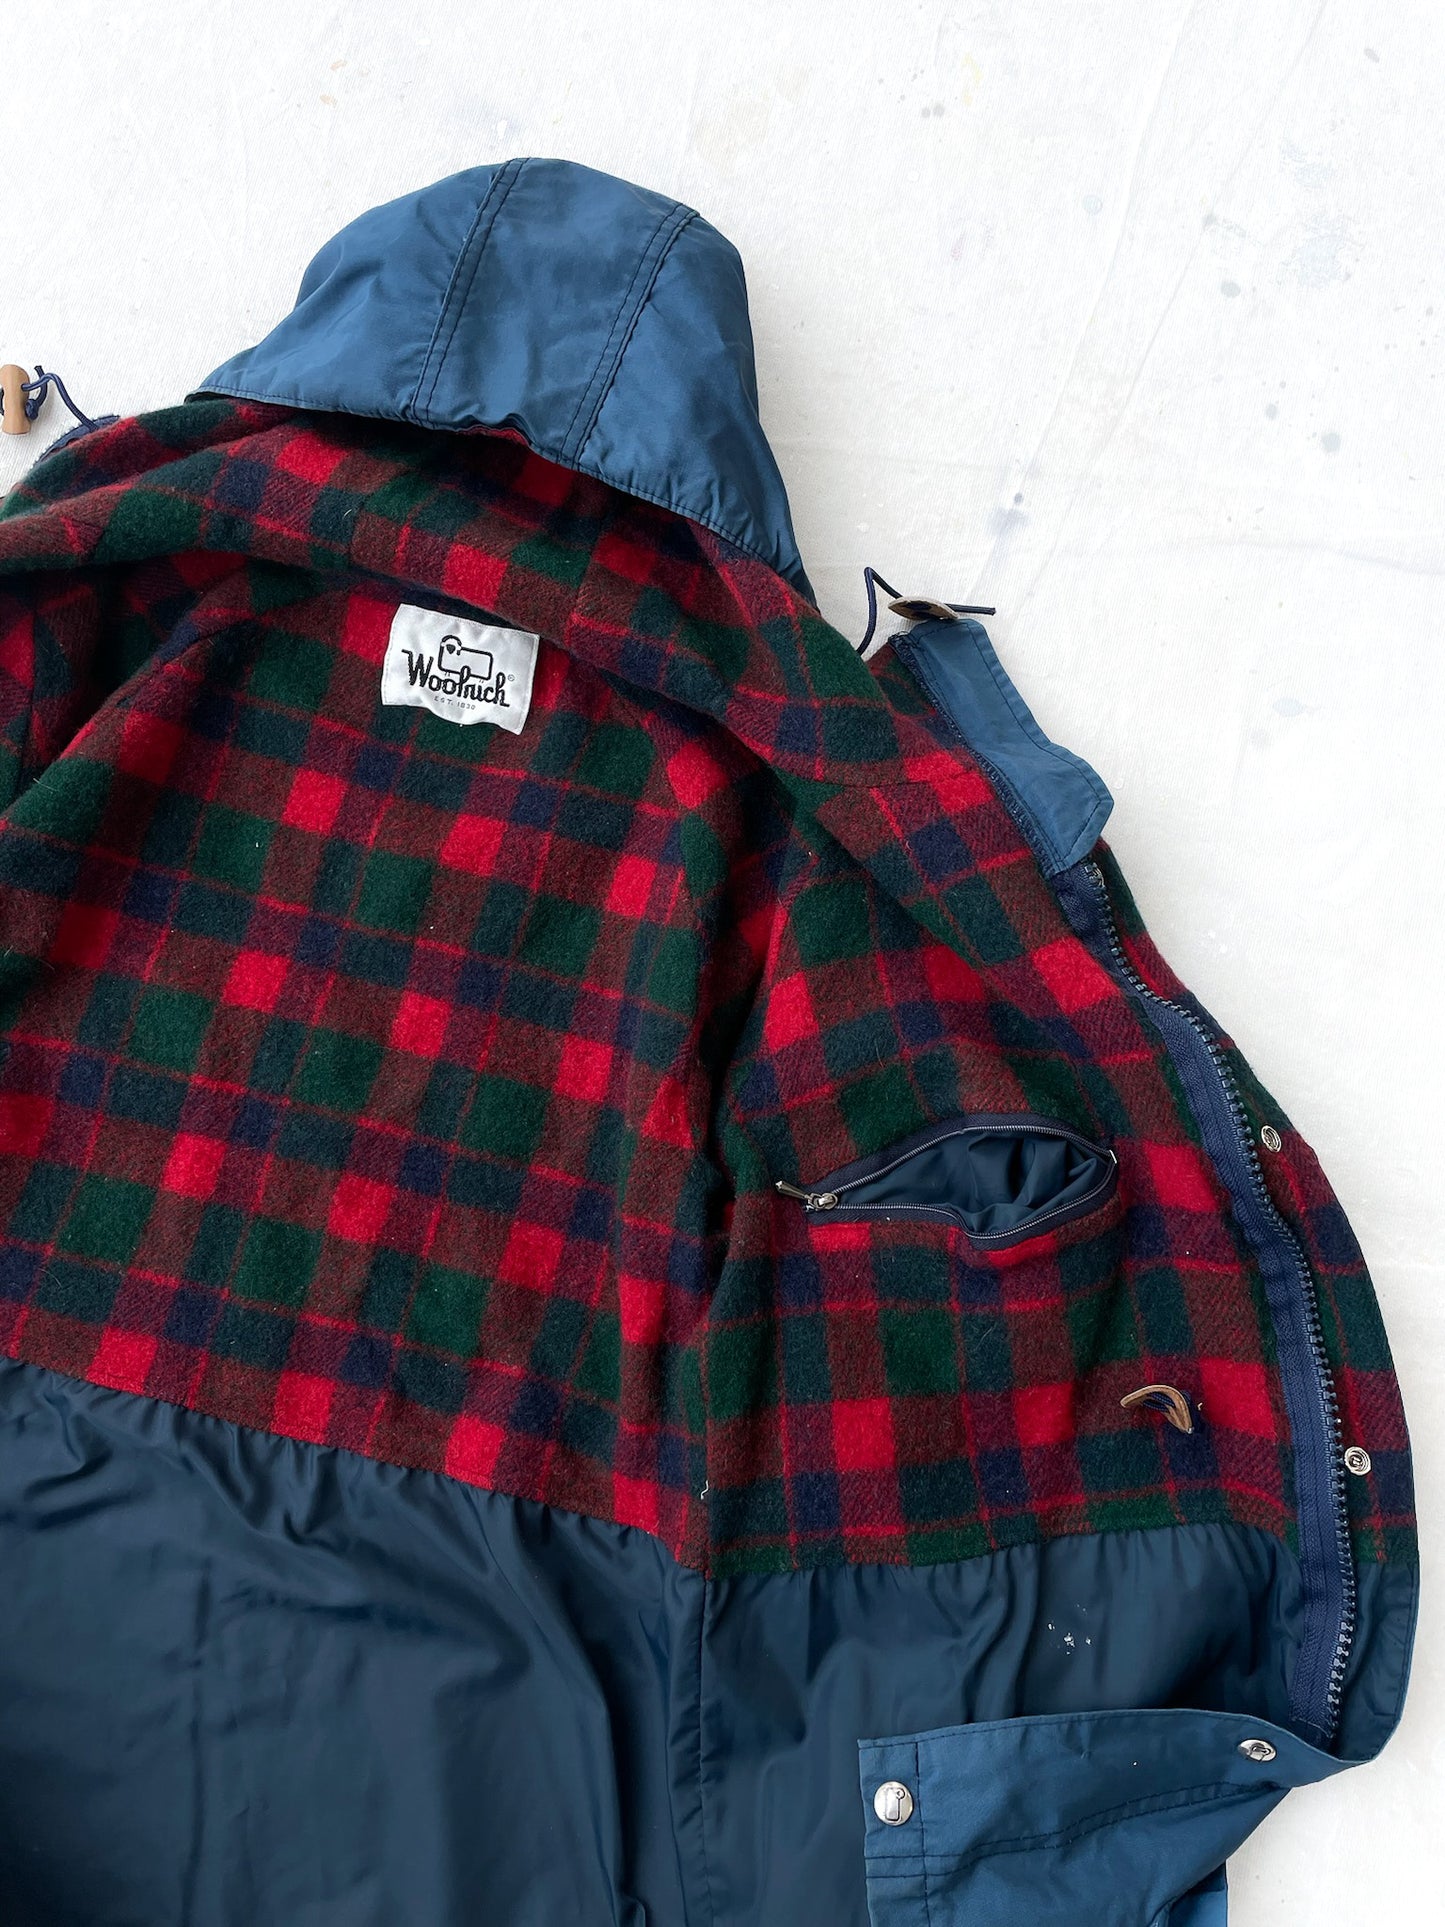 Loon Mountain Woolrich Wool Lined Jacket—[M]